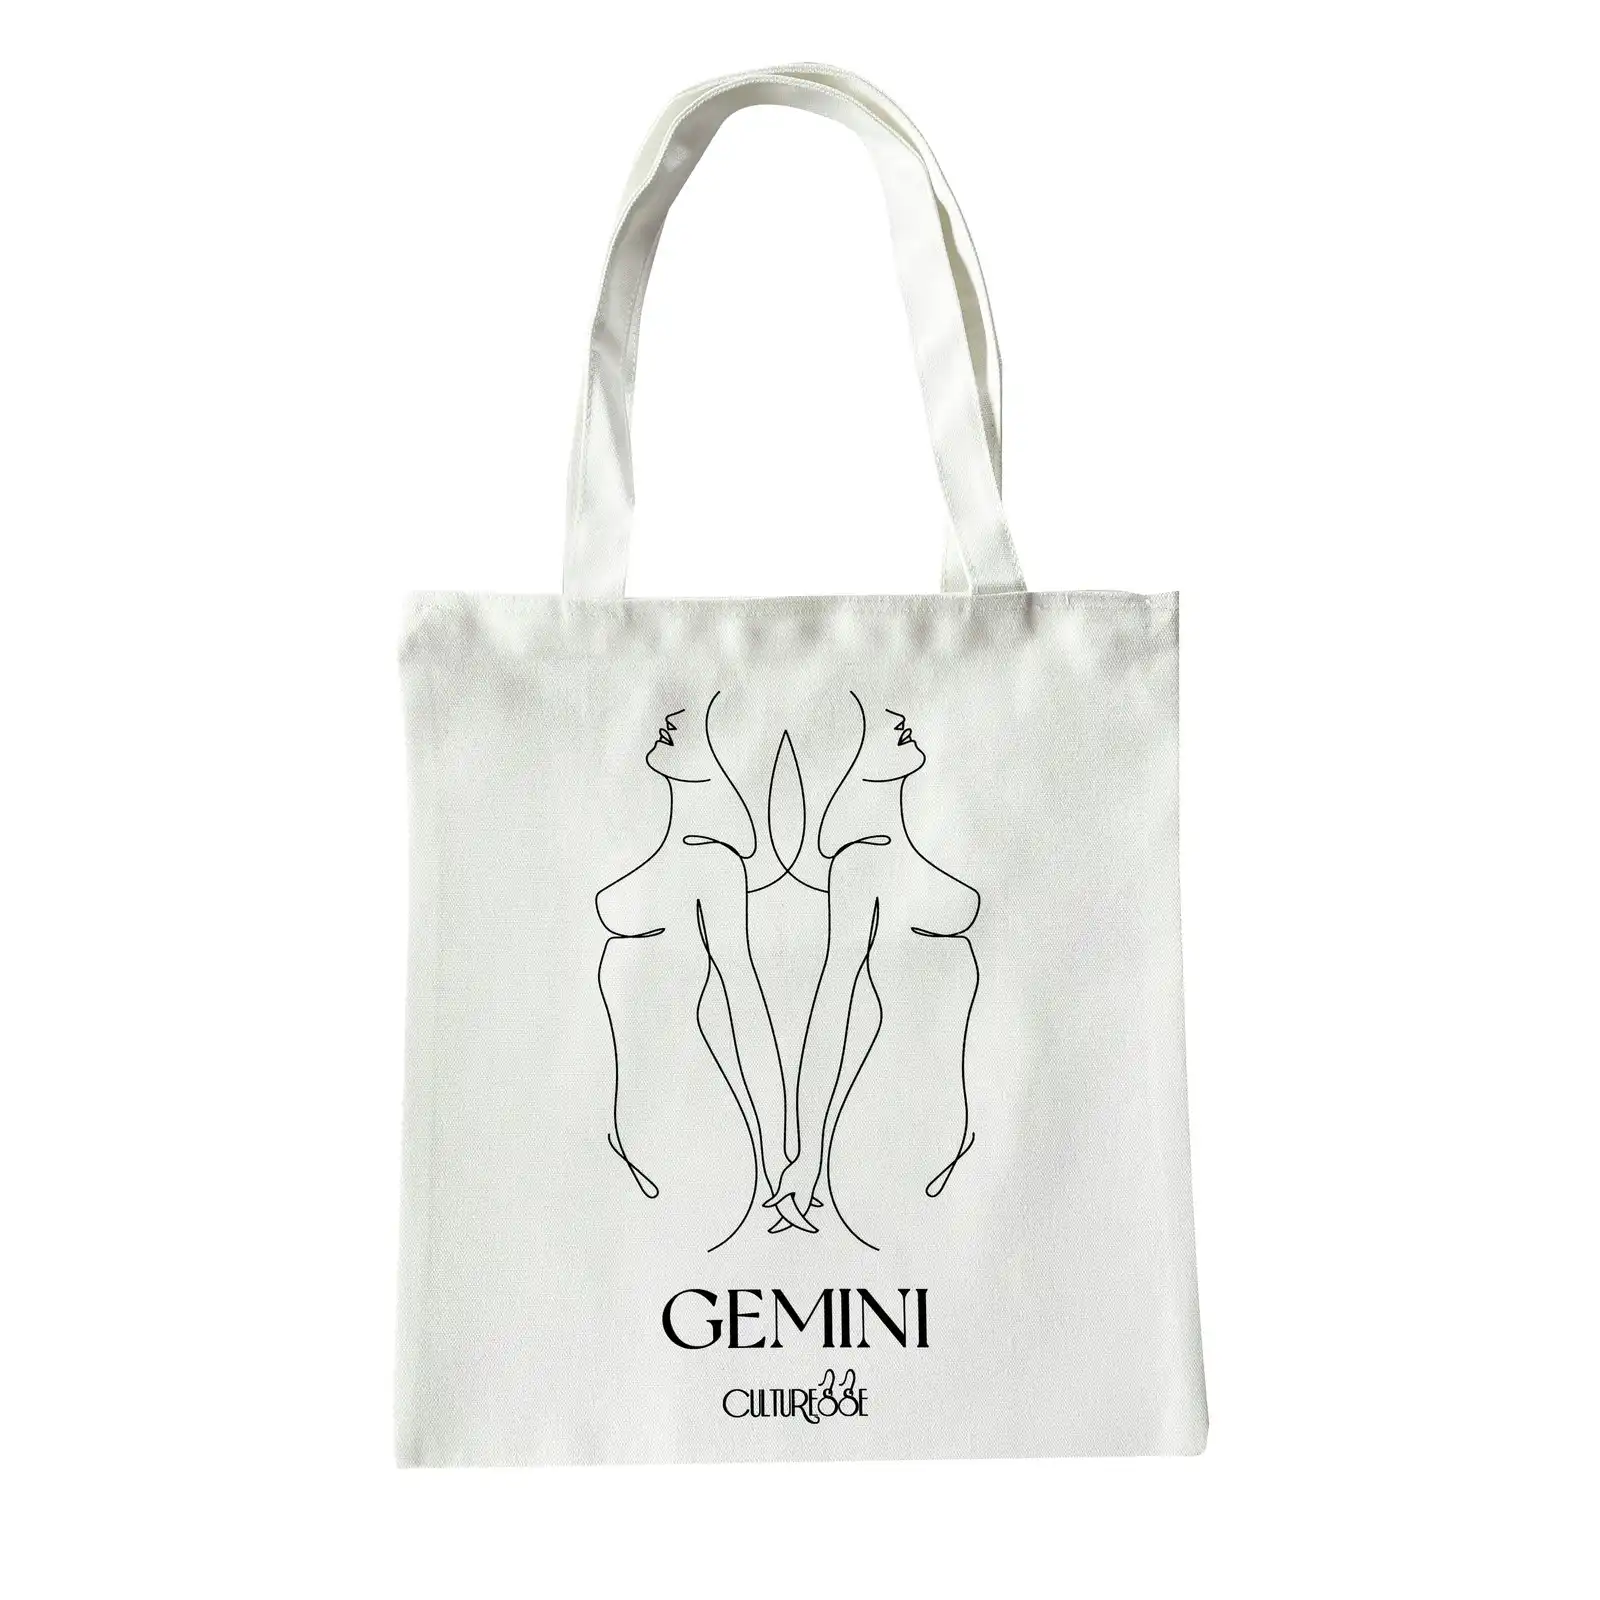 Culturesse She Is Gemini Eco Zodiac 38cm Muse Tote Bag Women's Handbag White